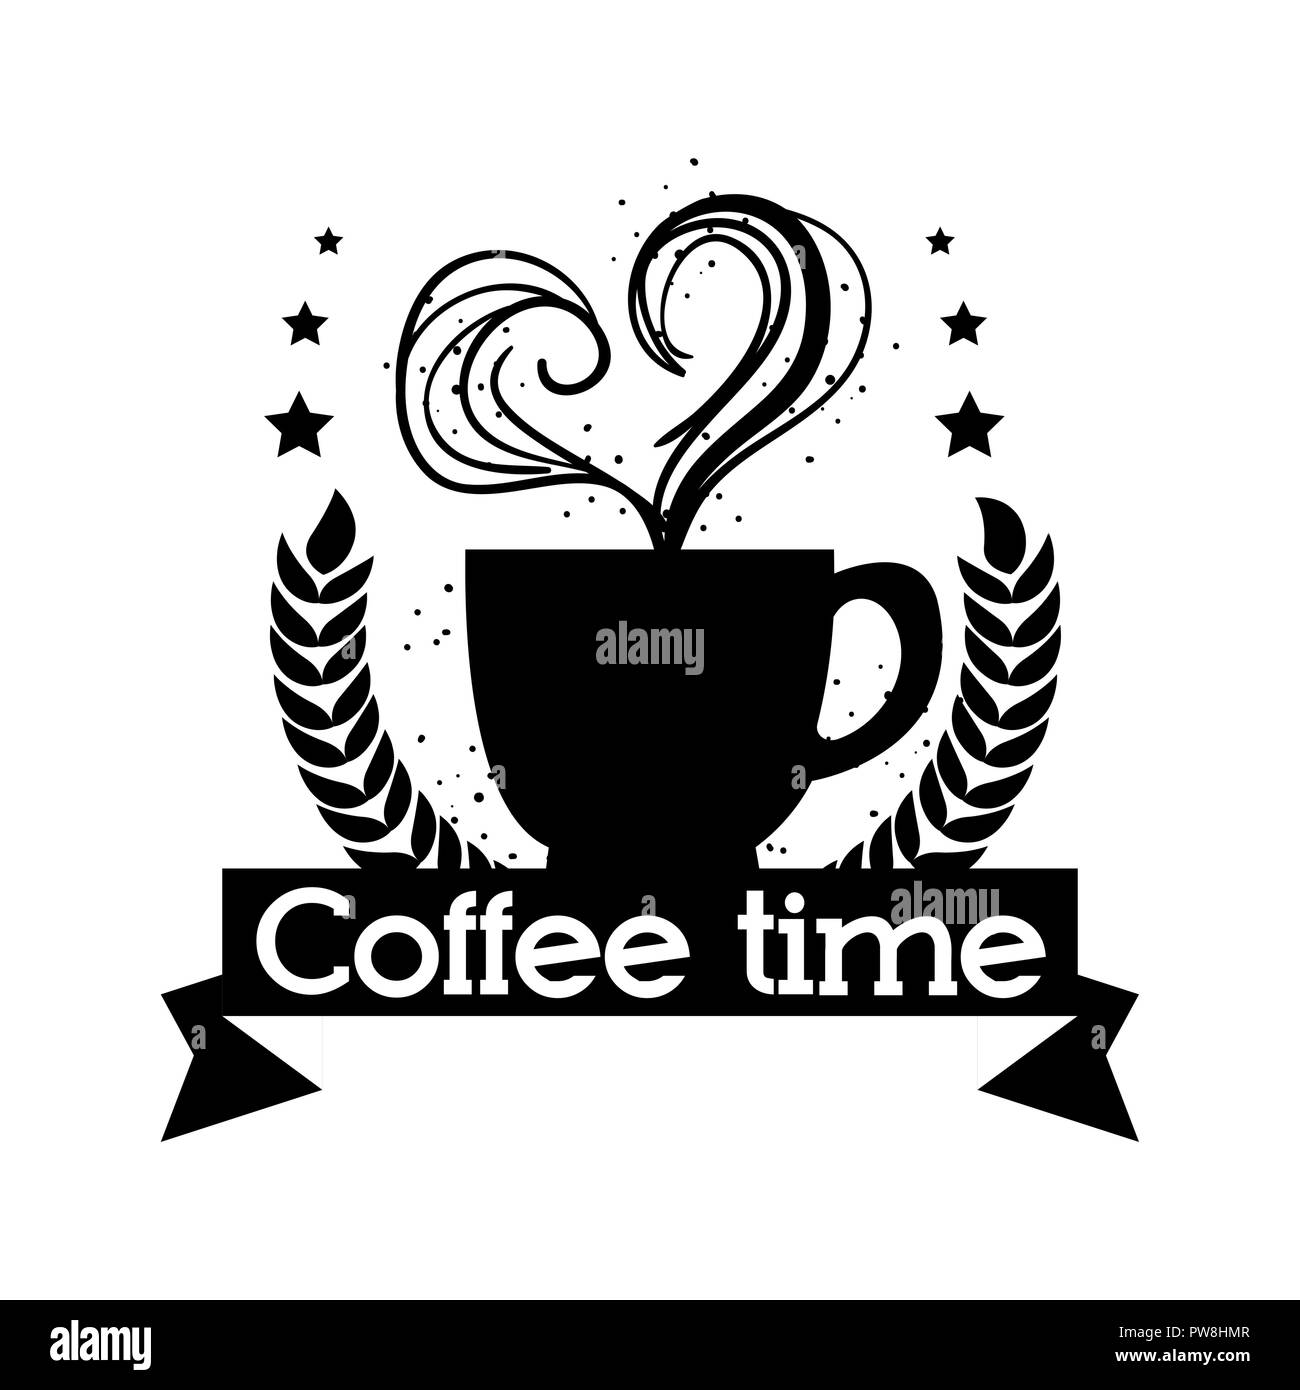 It s Coffee time картинки вектор. Cup время